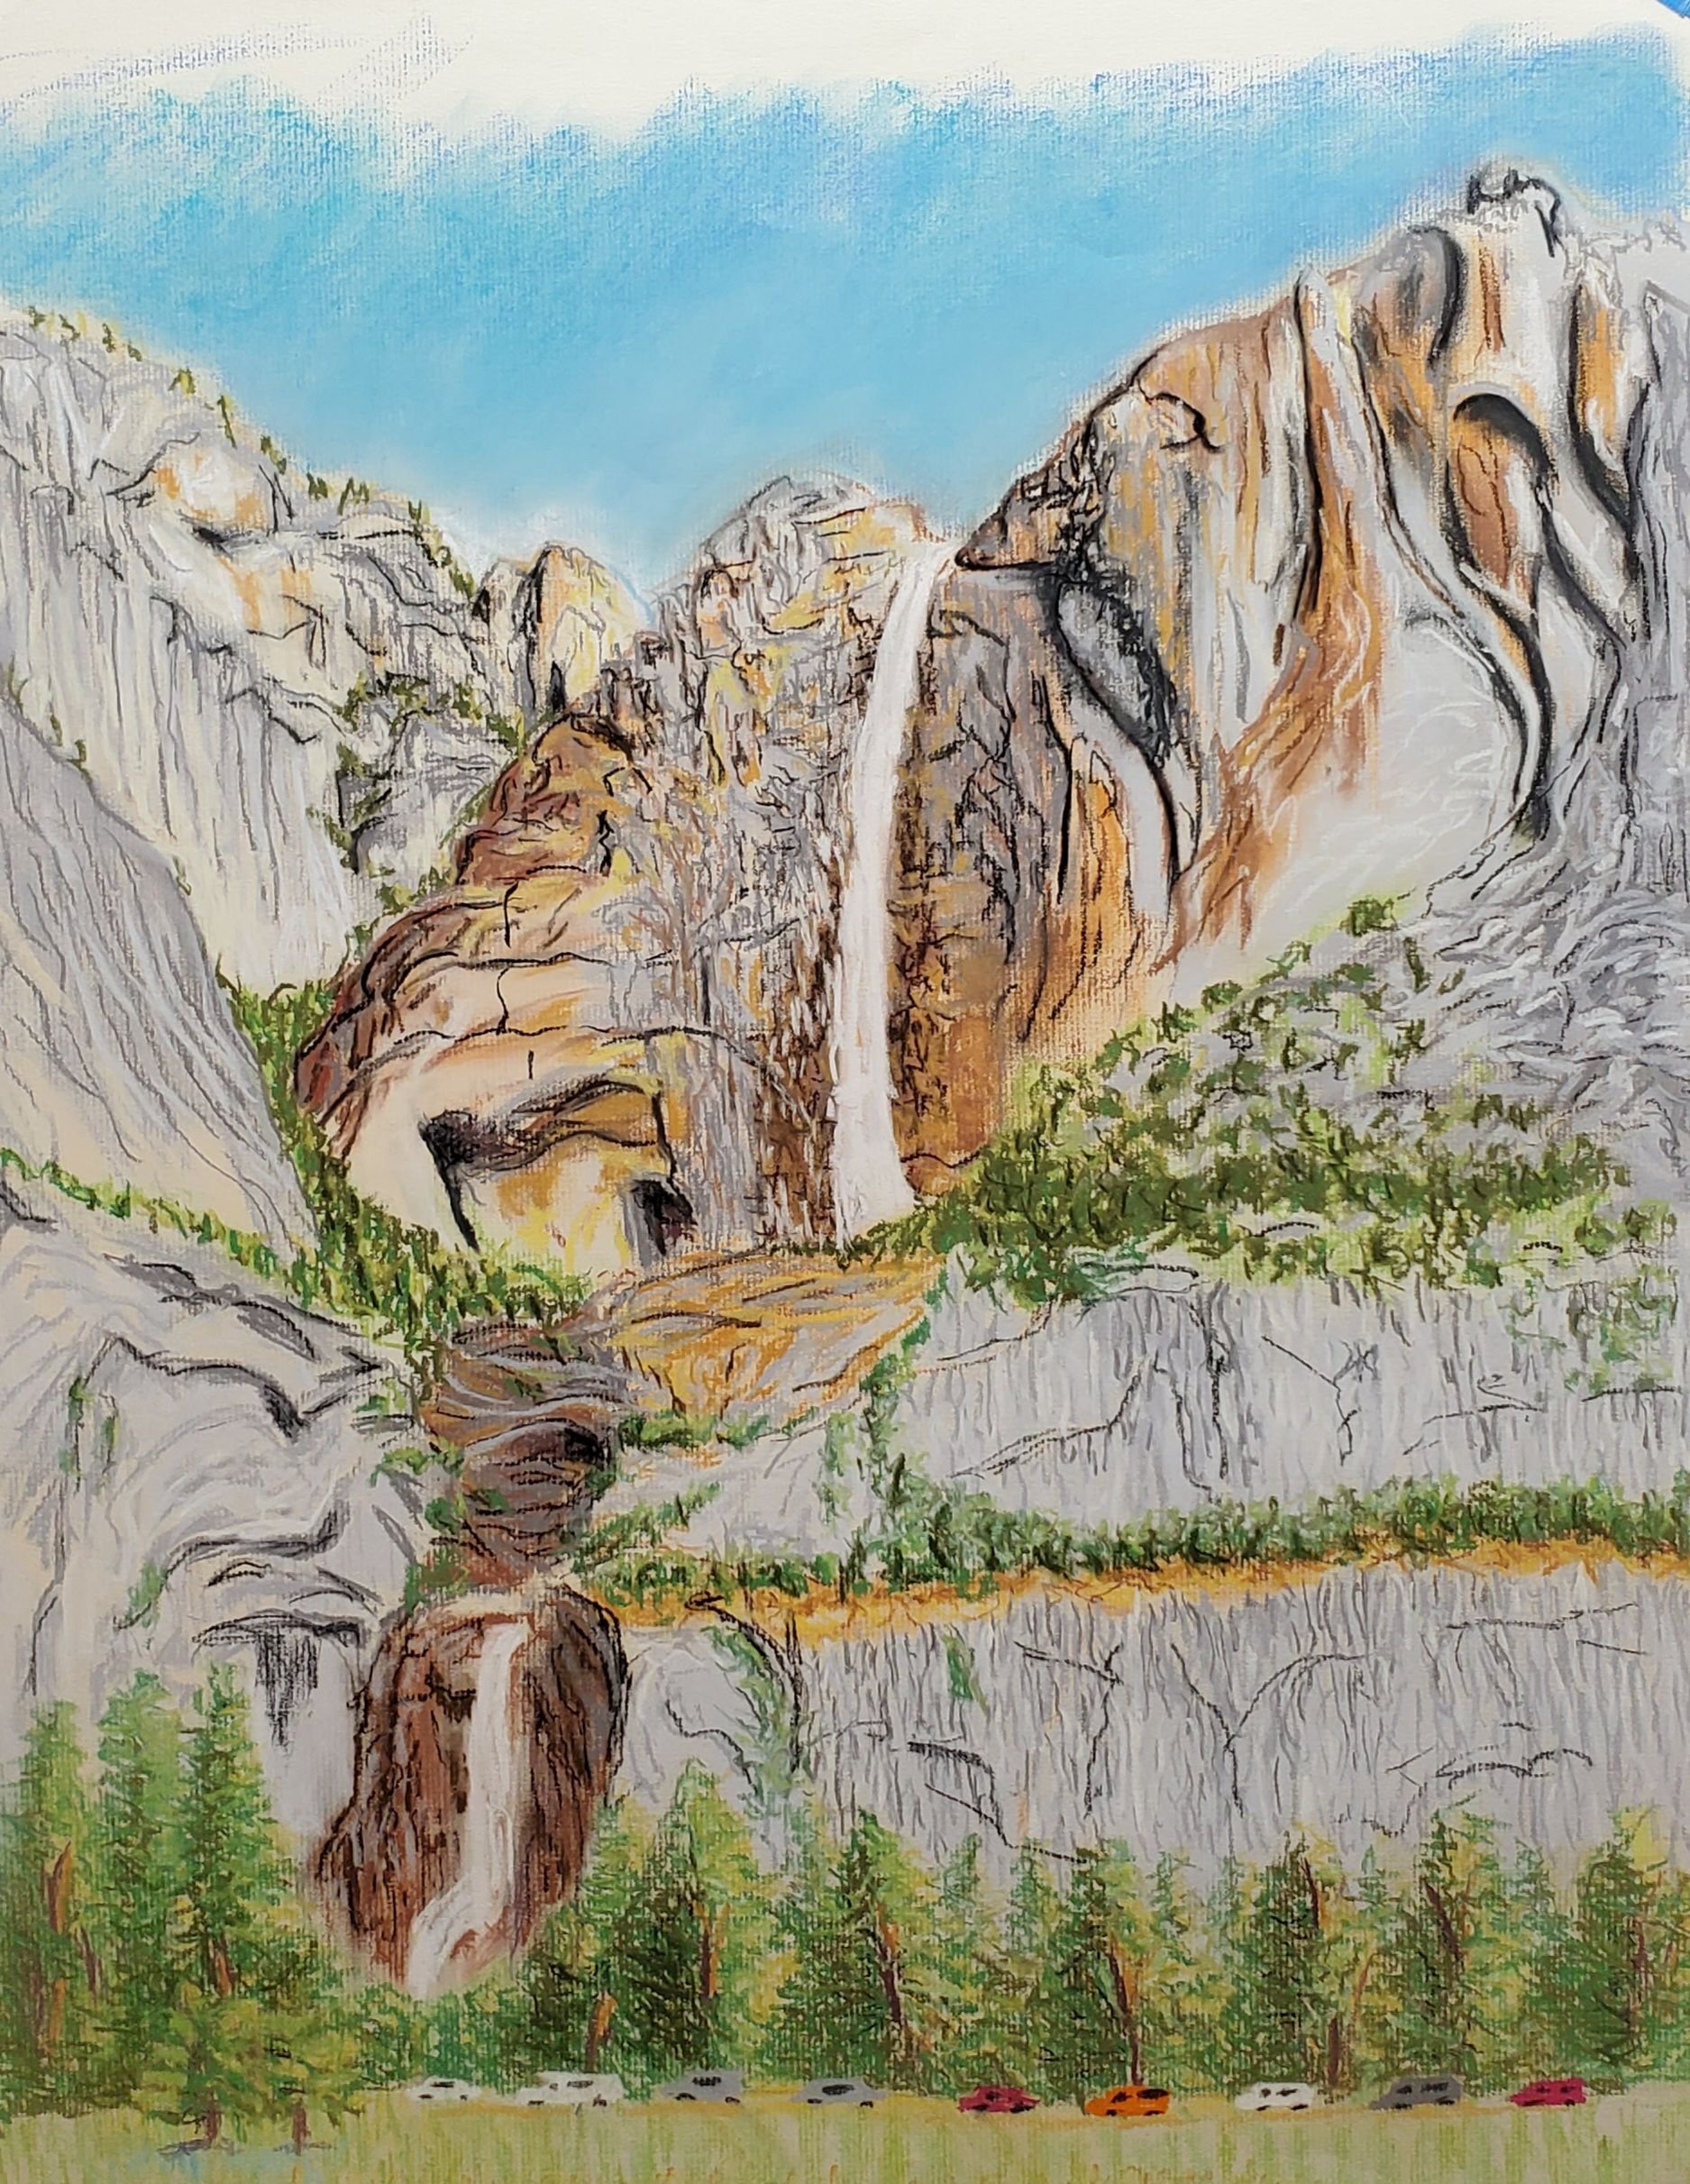 Leslie Aguilar. 2020. Yosemite Falls, pastel on paper, 24" x 18"